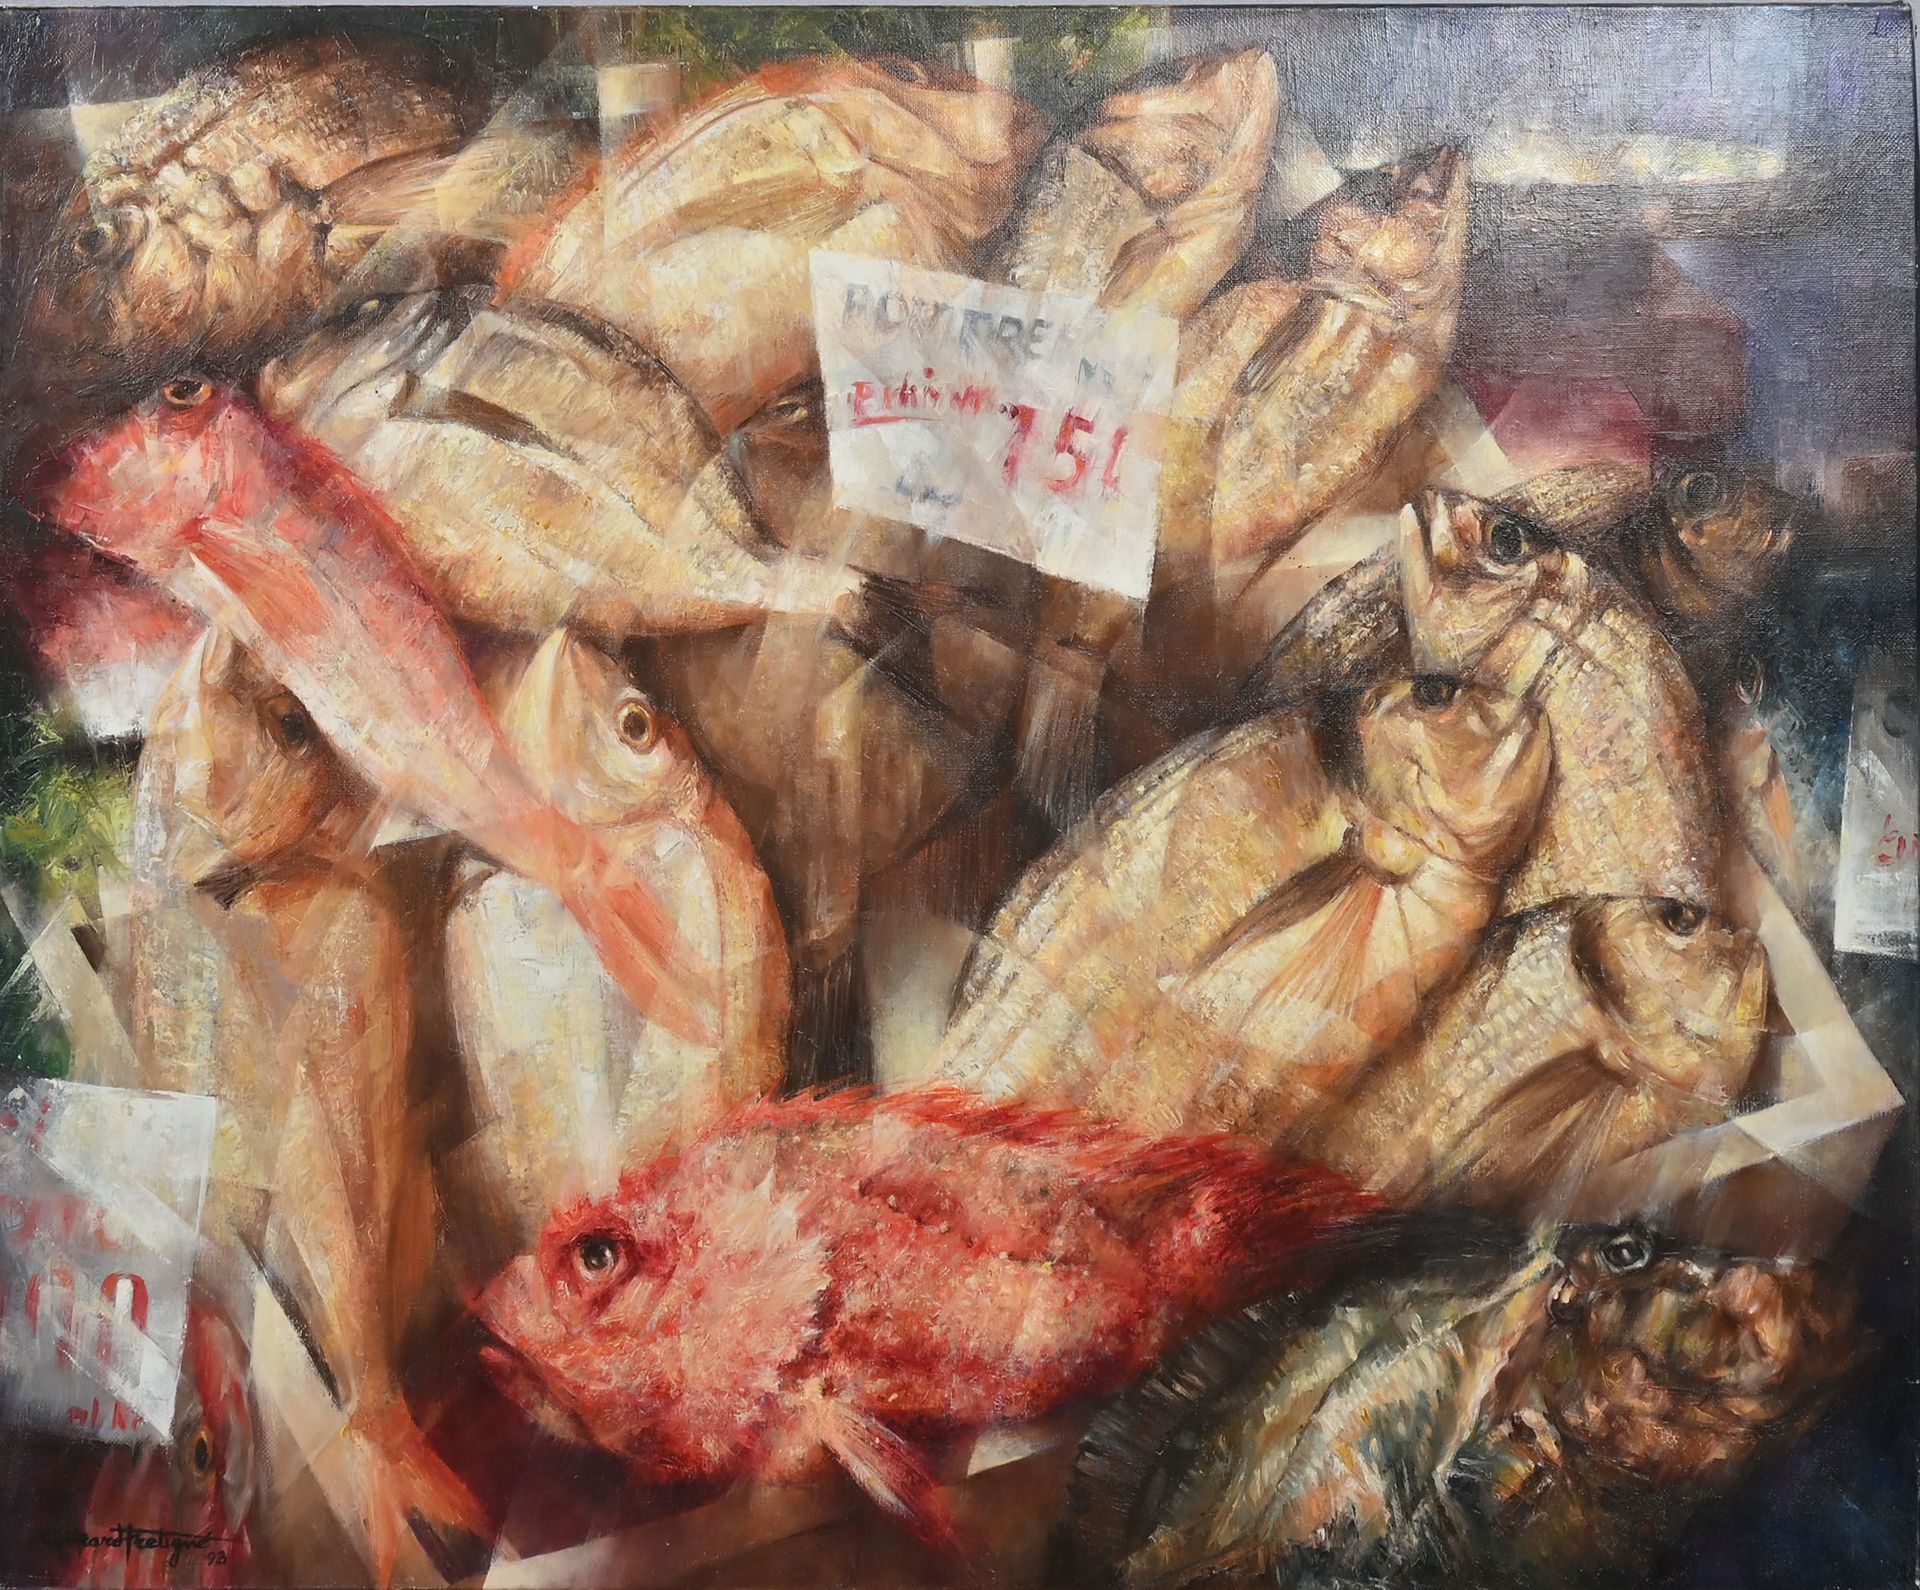 Null 杰拉德-弗雷迪内 (1928-2005)
市场上的鱼 - 1993
布面油画
左下方有签名，日期为93
60 x 73 cm。